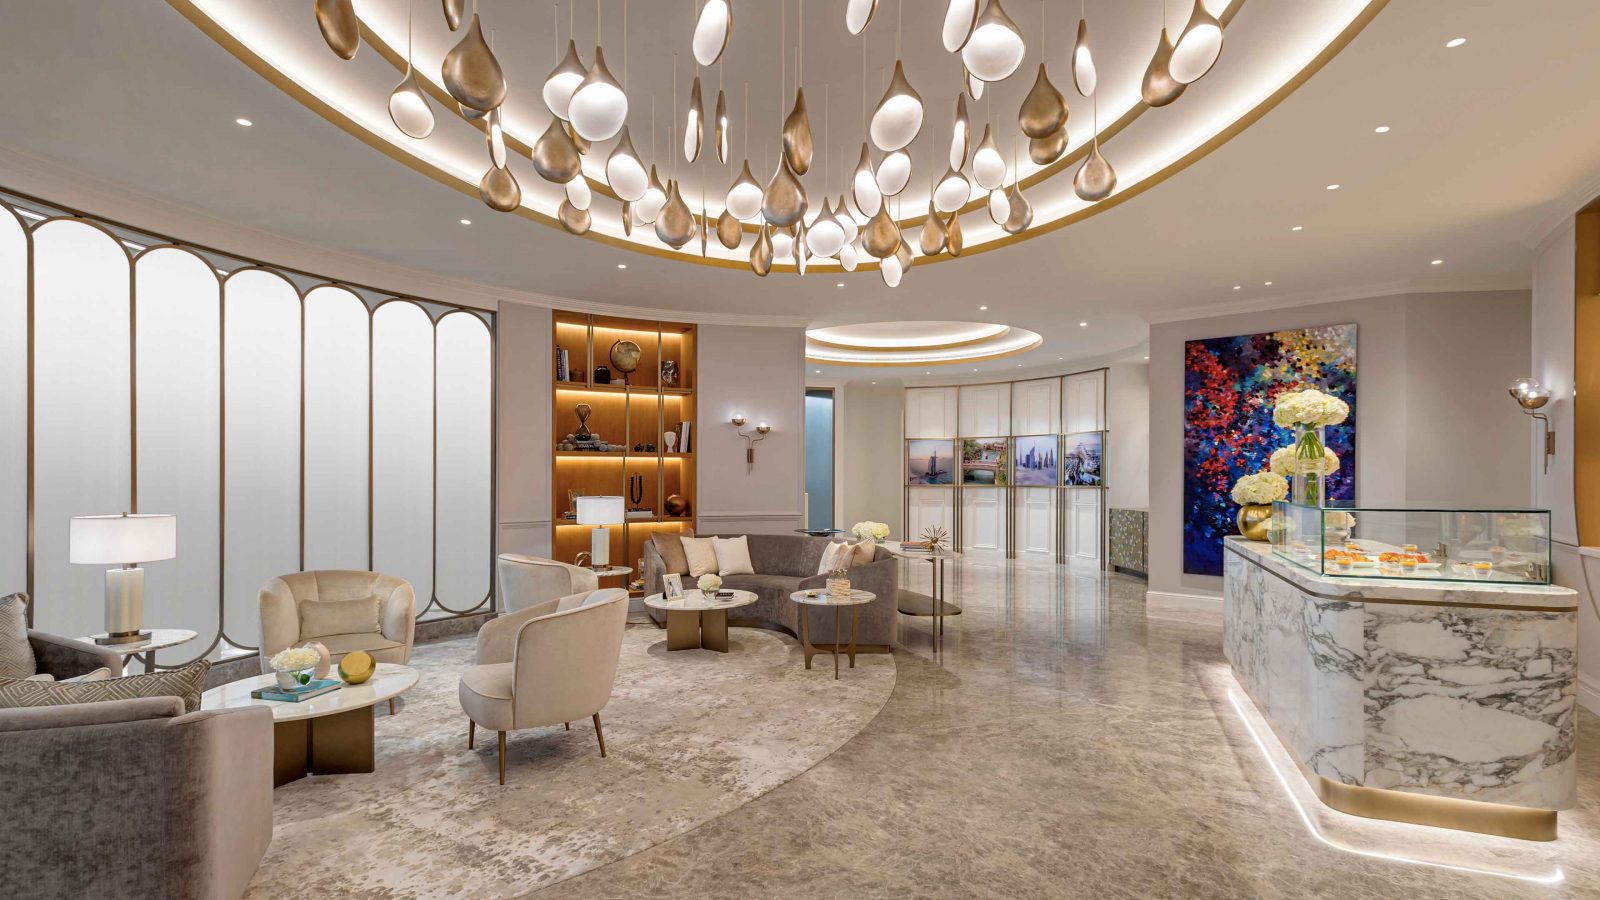 T3 Airport Lounge Luxury Interior Illuminated Double Ceiling Cove Oggetti Chandelier Architectural Lighting Designers Studio N Dubai